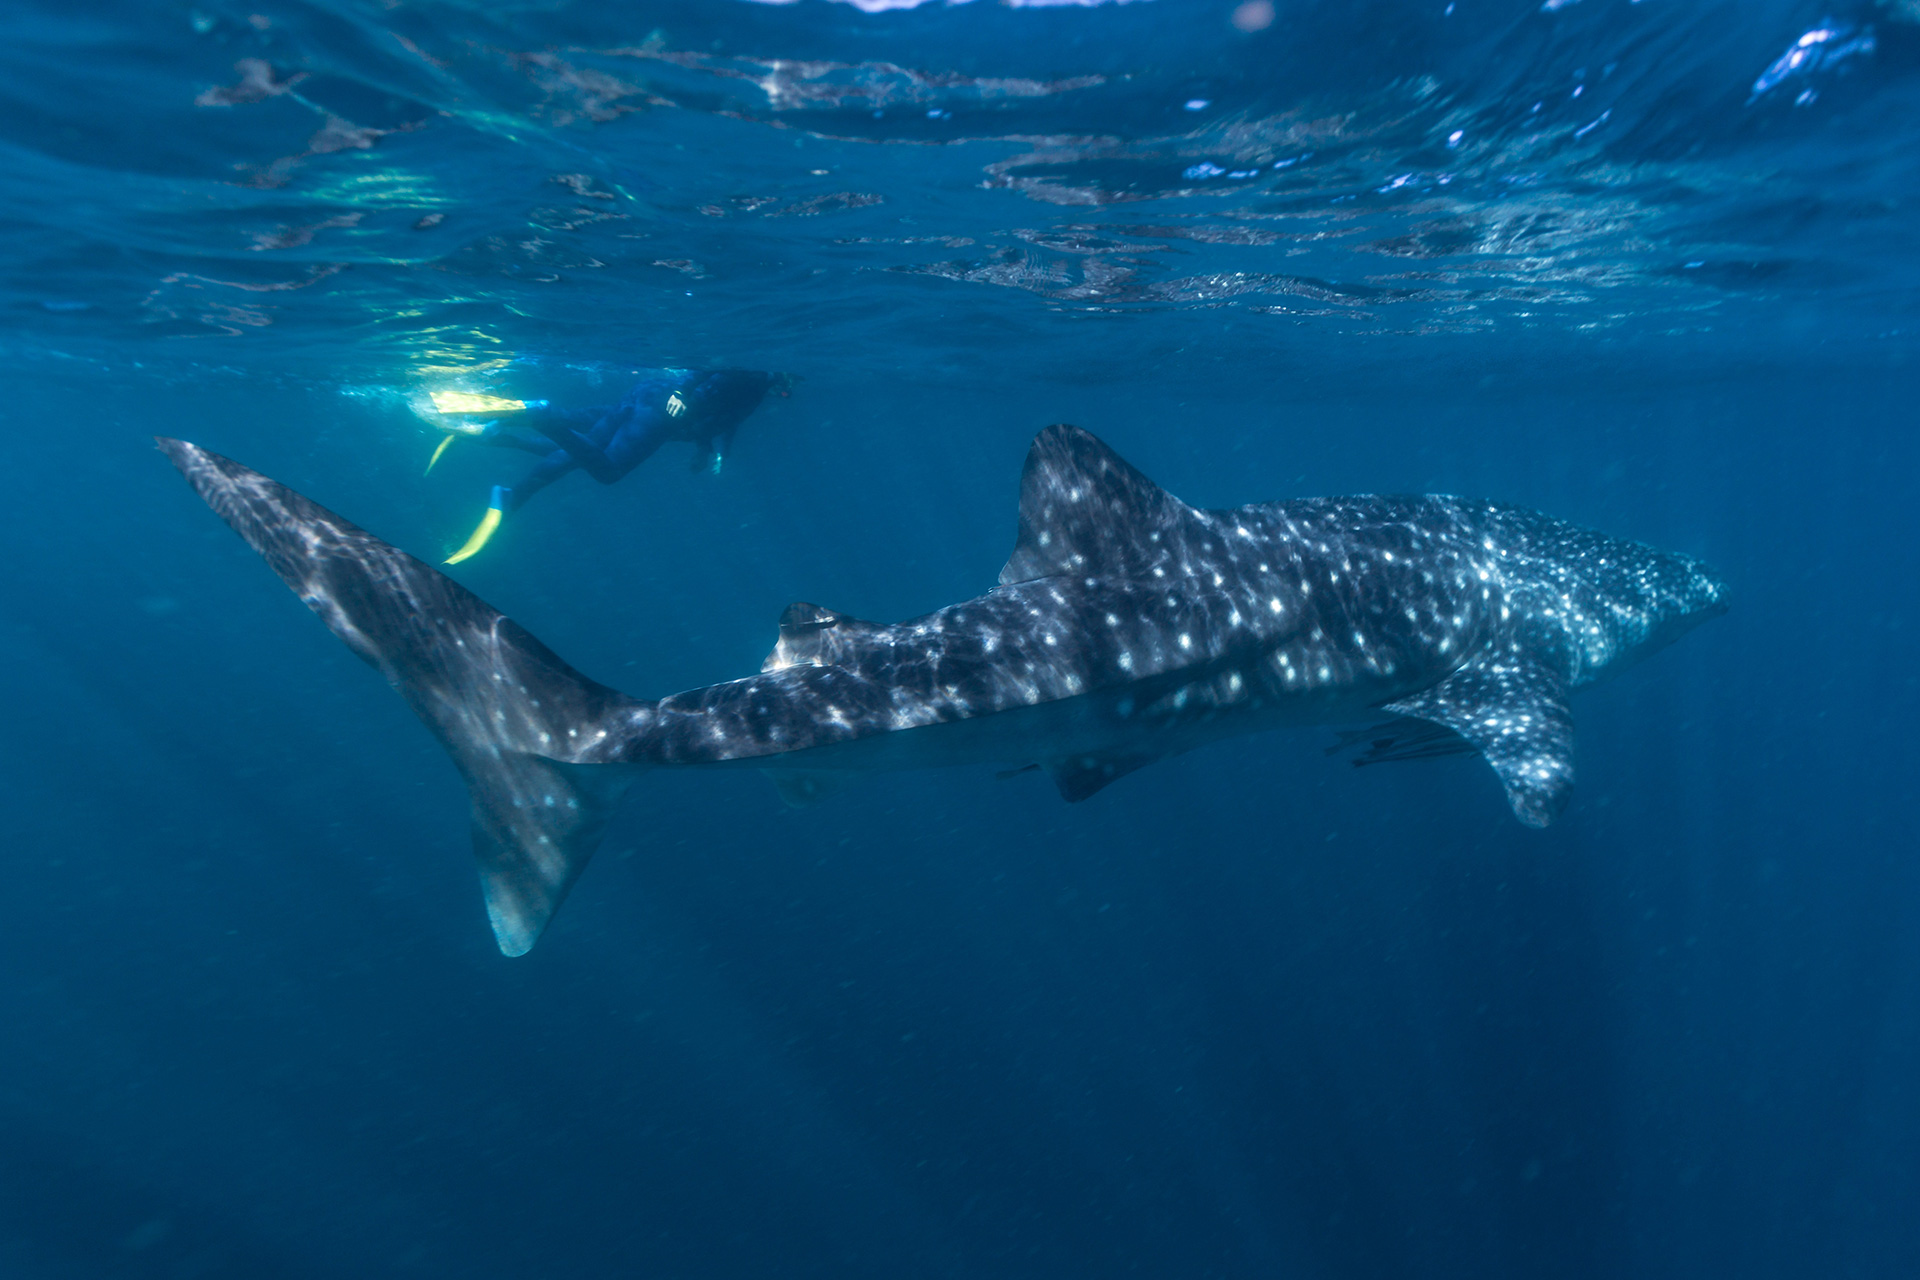 Swimming with whale shark (Rhincondon typus). Photo credit: Tourism Western Australia